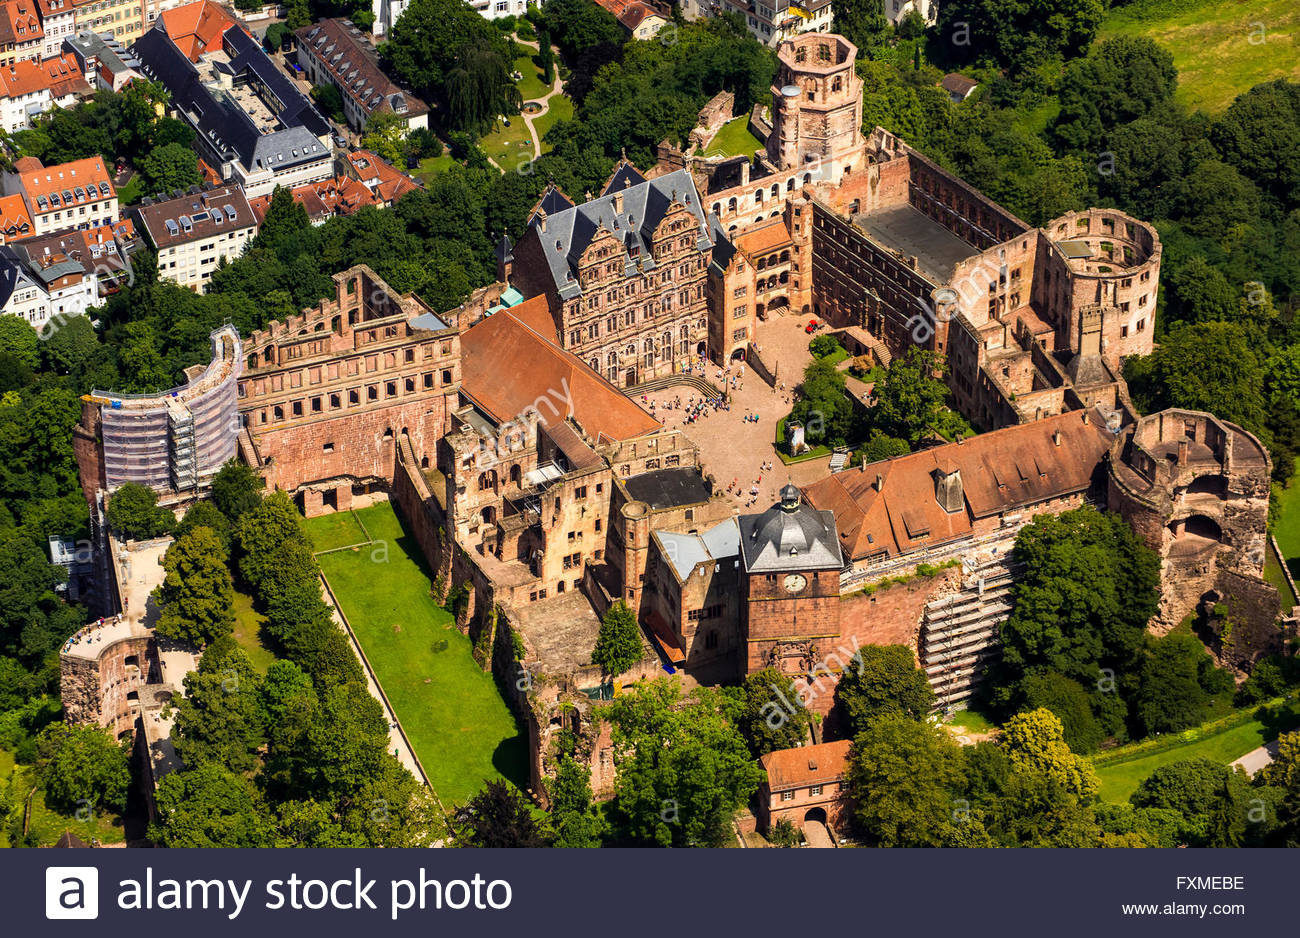 Nice Images Collection: Heidelberg Castle Desktop Wallpapers